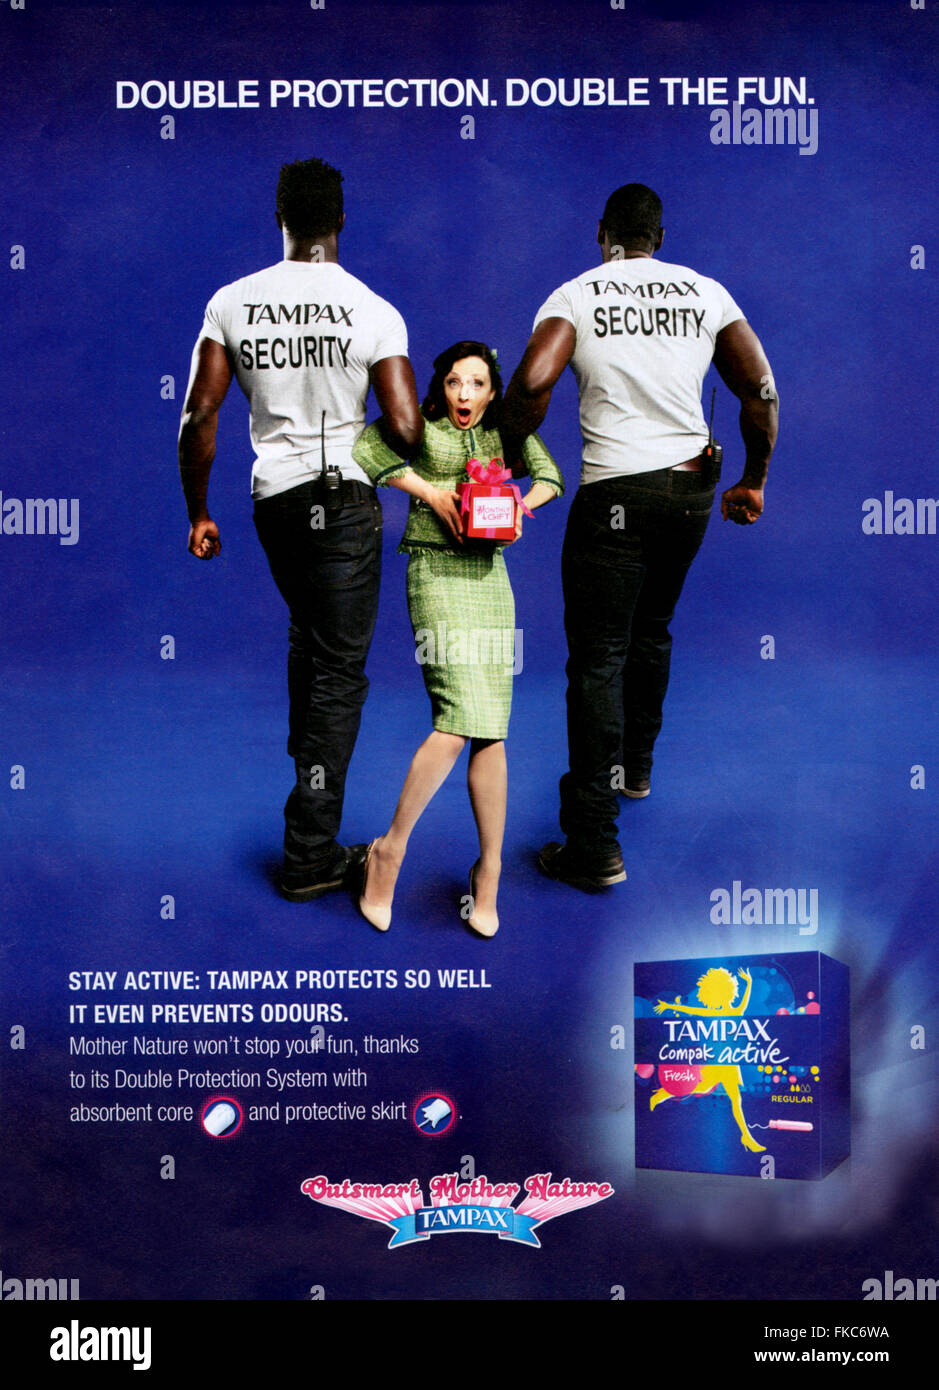 2010s UK Tampax Magazine Advert Stock Photo - Alamy